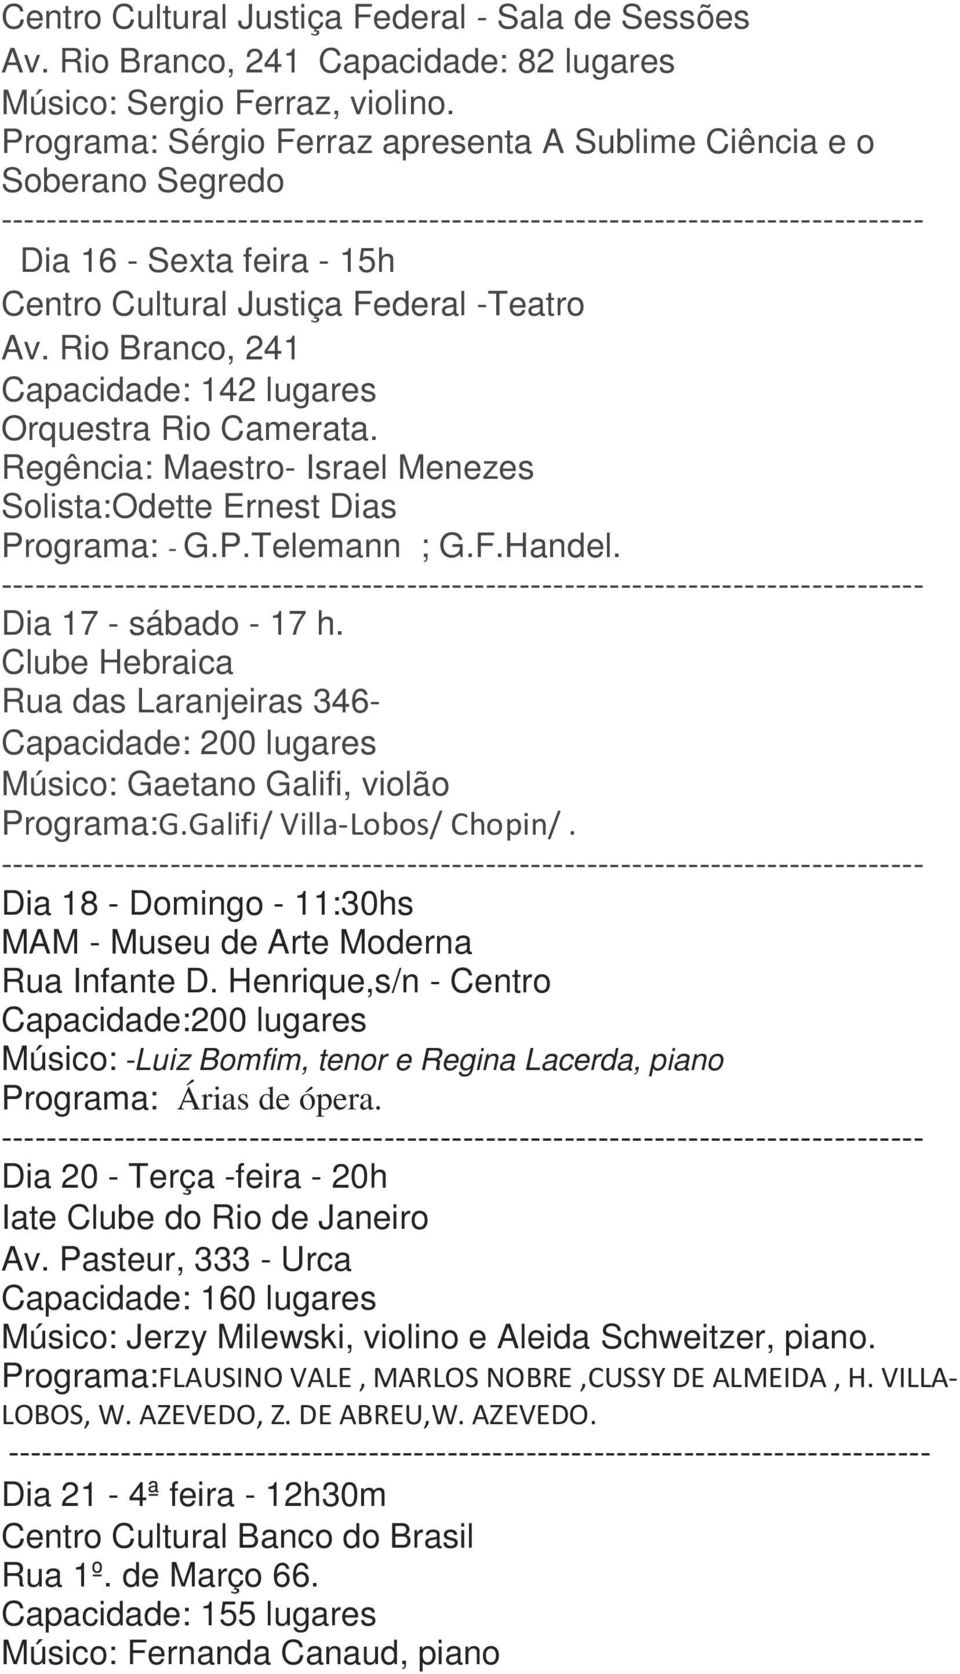 Rio Branco, 241 Capacidade: 142 lugares Orquestra Rio Camerata. Regência: Maestro- Israel Menezes Solista:Odette Ernest Dias Programa: G.P.Telemann ; G.F.Handel. Dia 17 - sábado - 17 h.